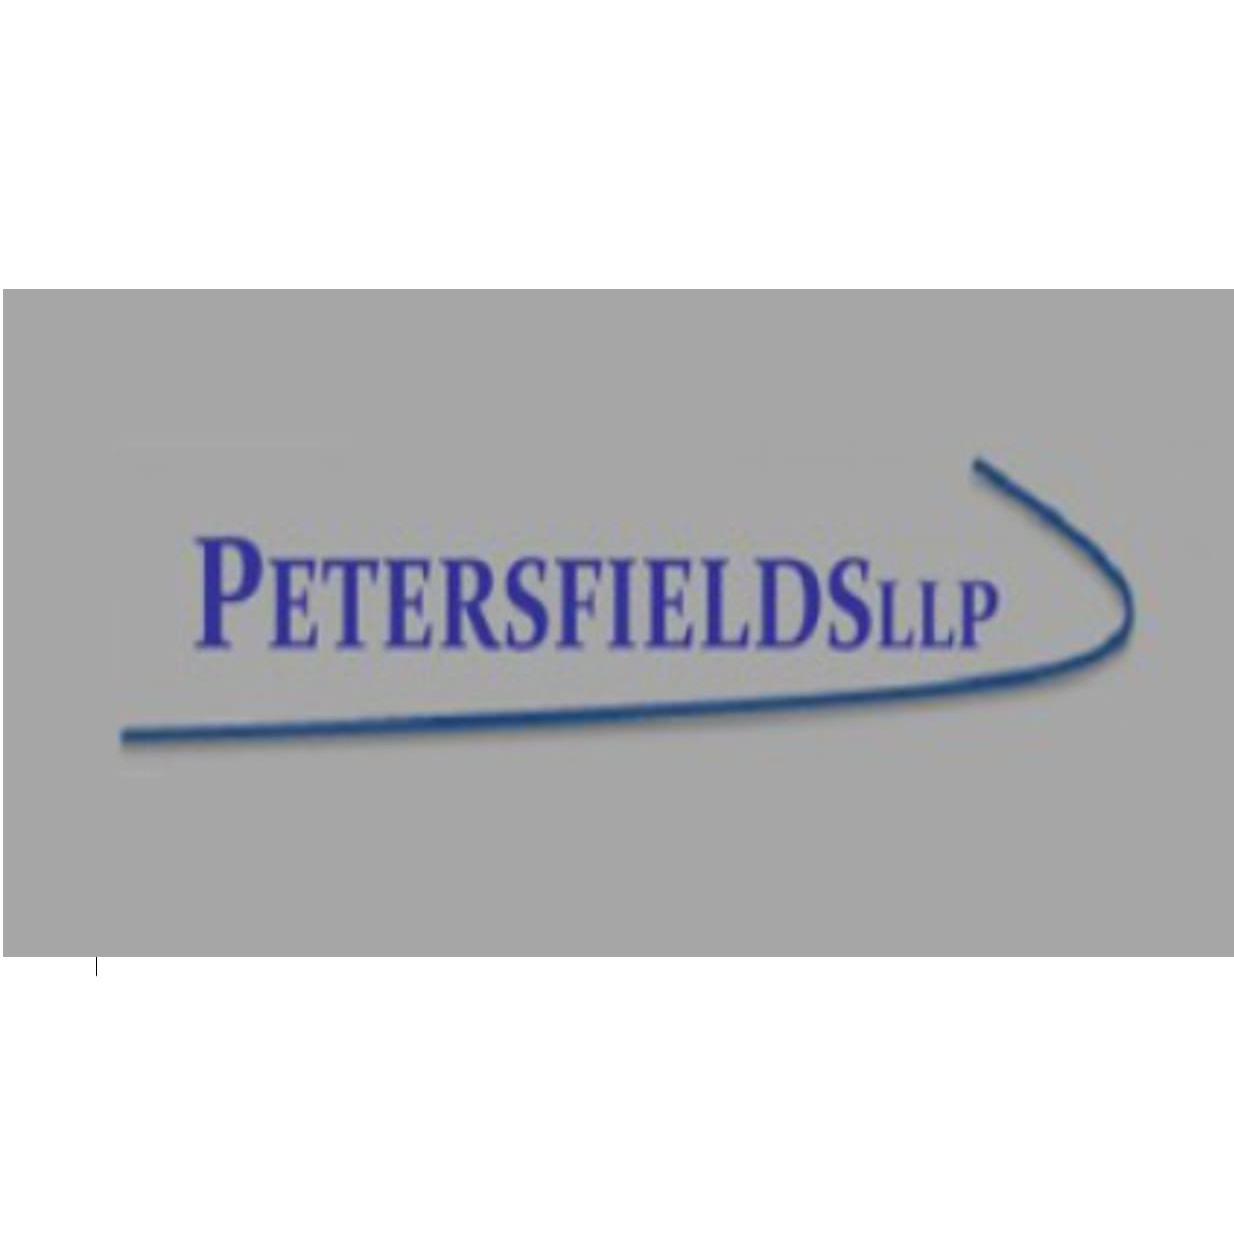 Petersfields LLP - Cambridge, Cambridgeshire - 01223 653210 | ShowMeLocal.com